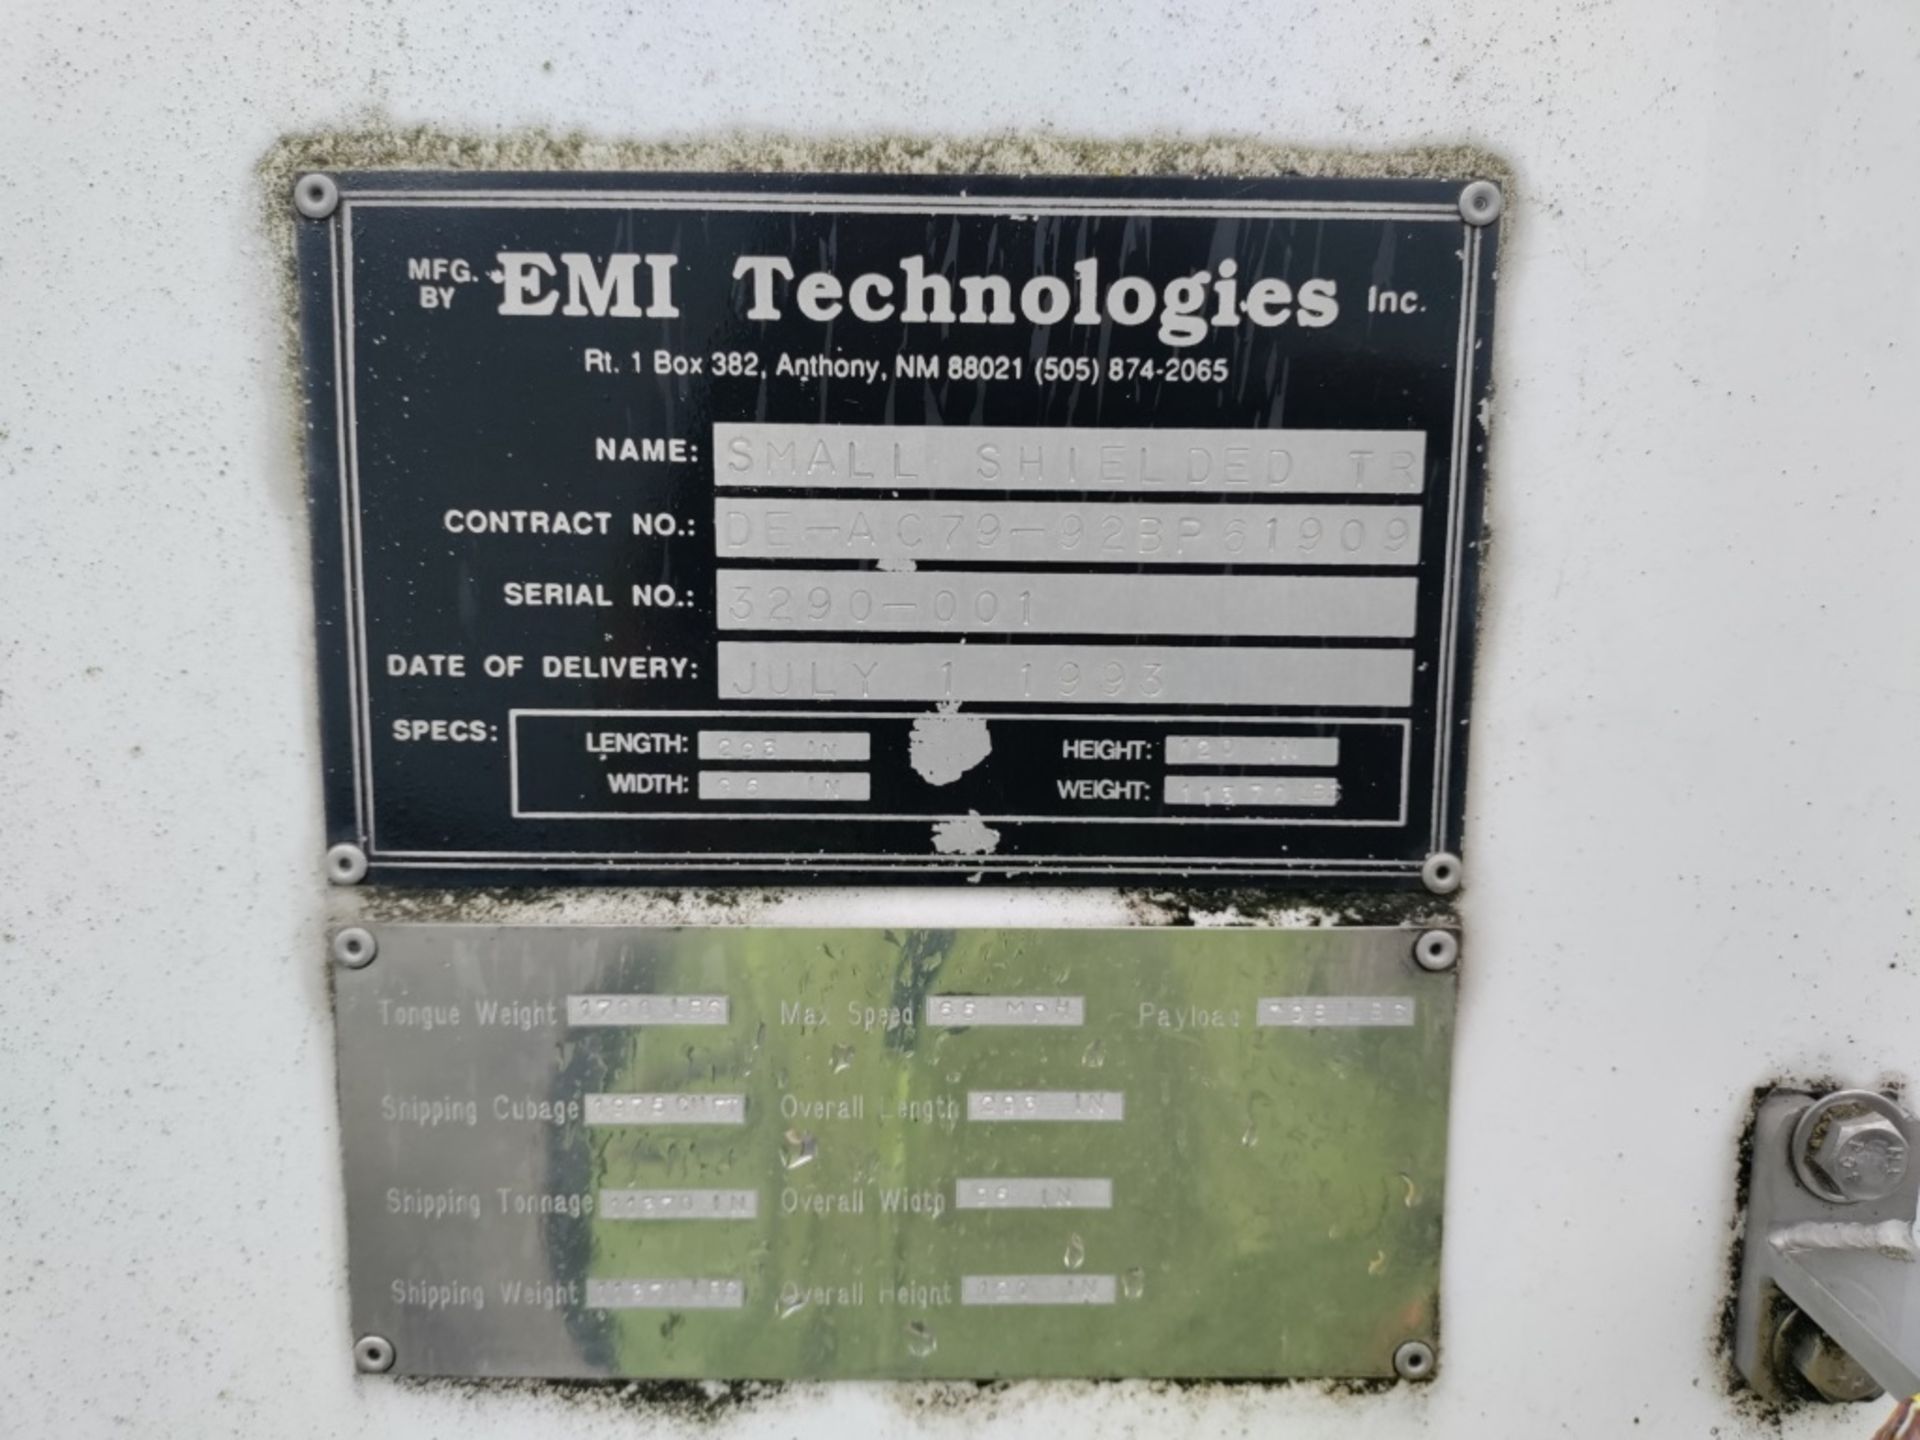 1993 EMI Technologies T/A Shielded Trailer - Image 14 of 33